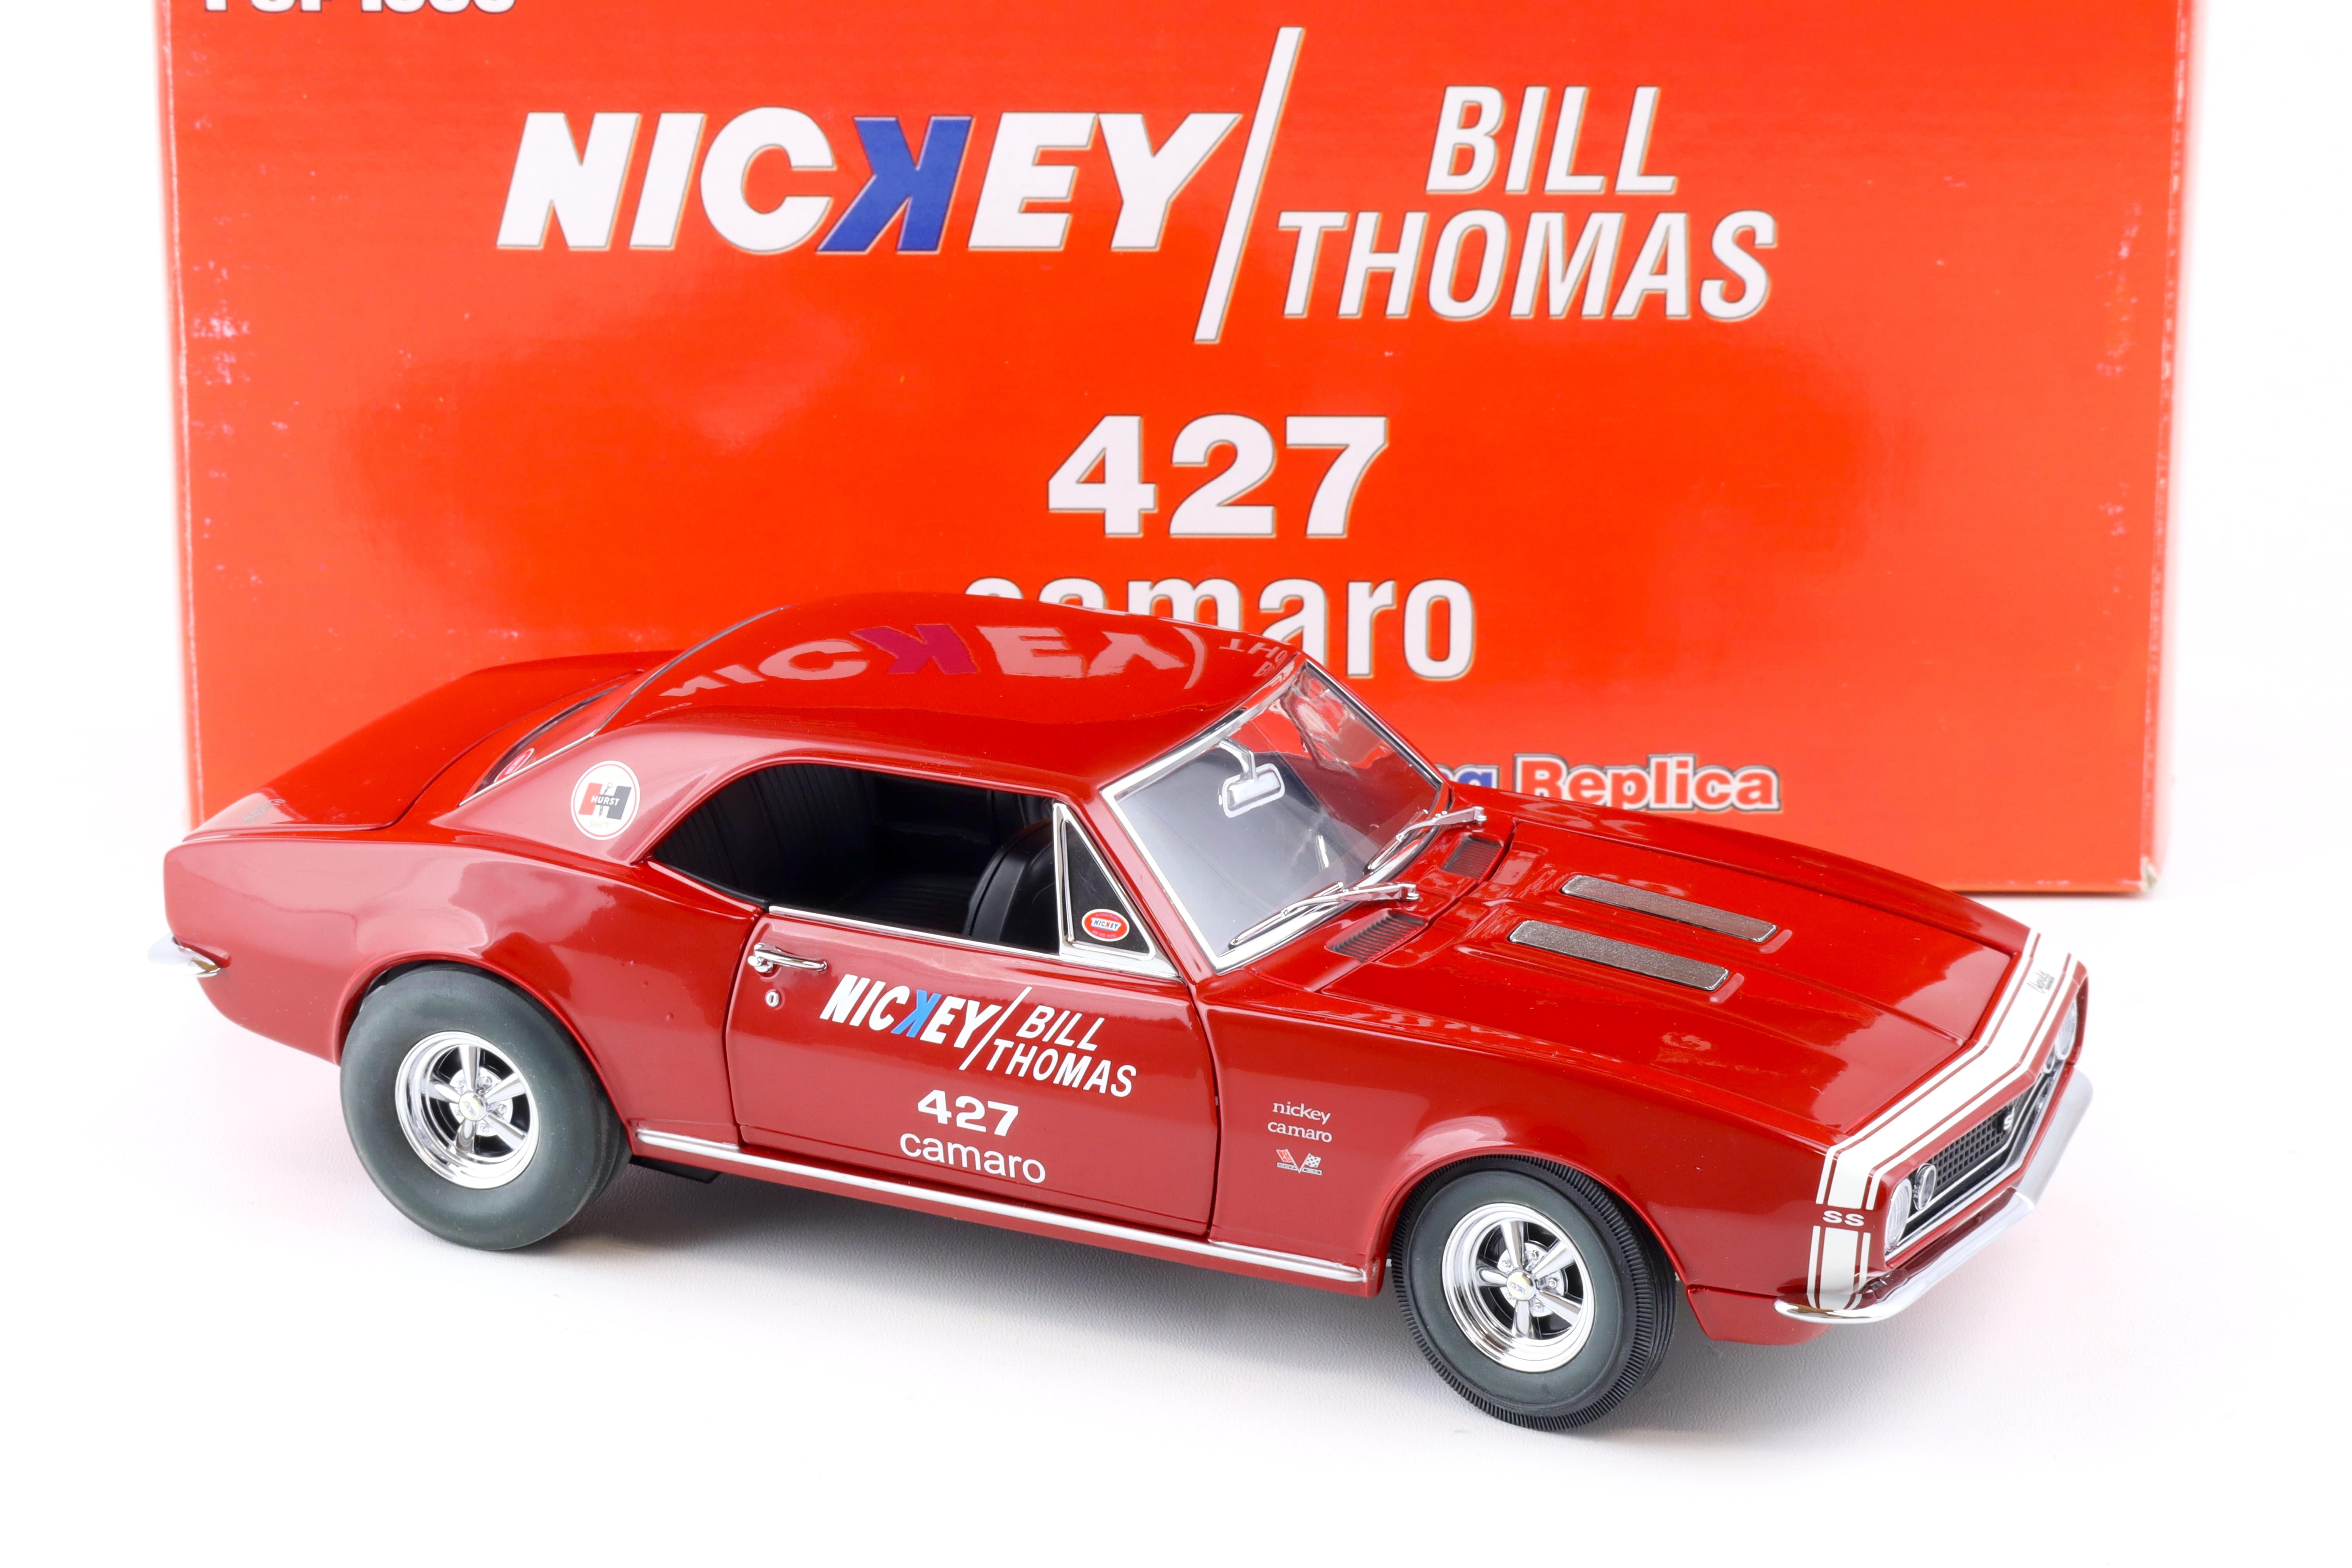 1:18 Exact Detail 1967 Chevrolet Camaro 427 Nickey Bill Thomas red WCC209D